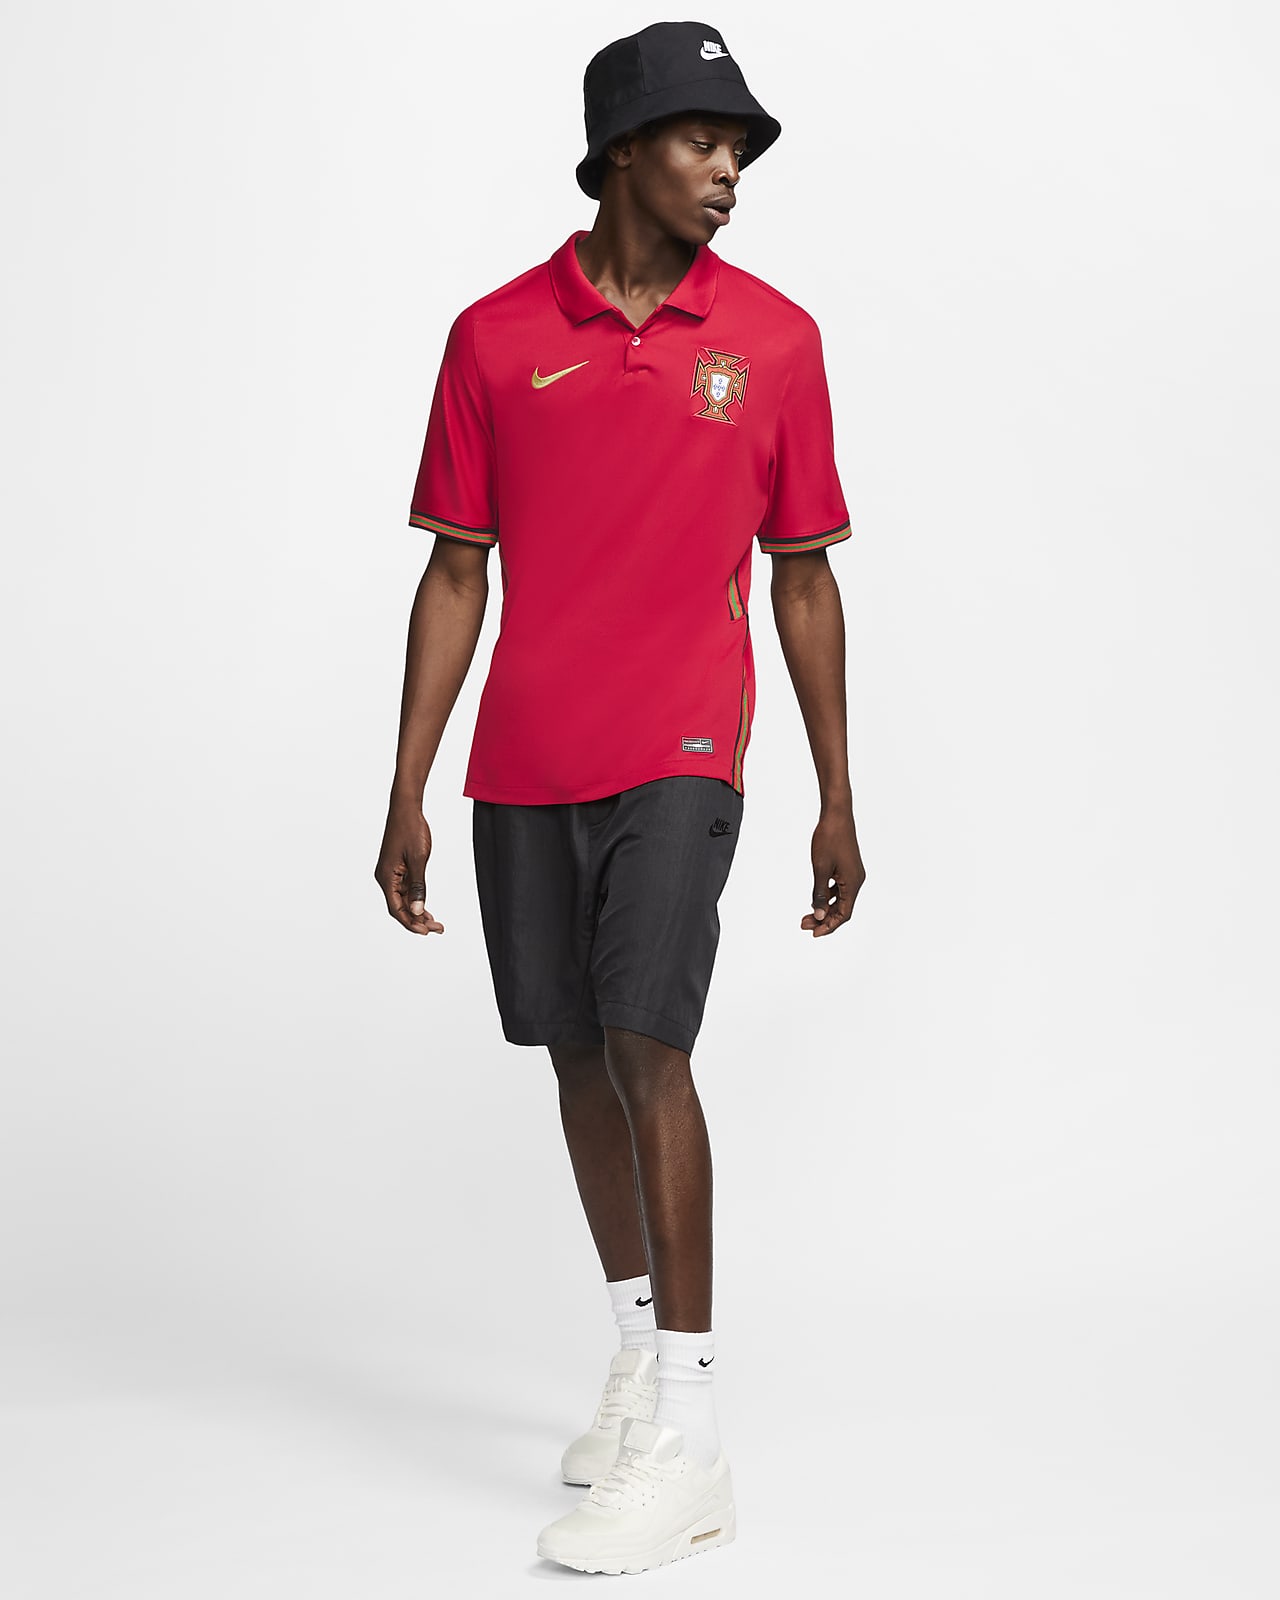 Portugal 2020 Nike Home Kit | 20/21 Kits | Football shirt blog